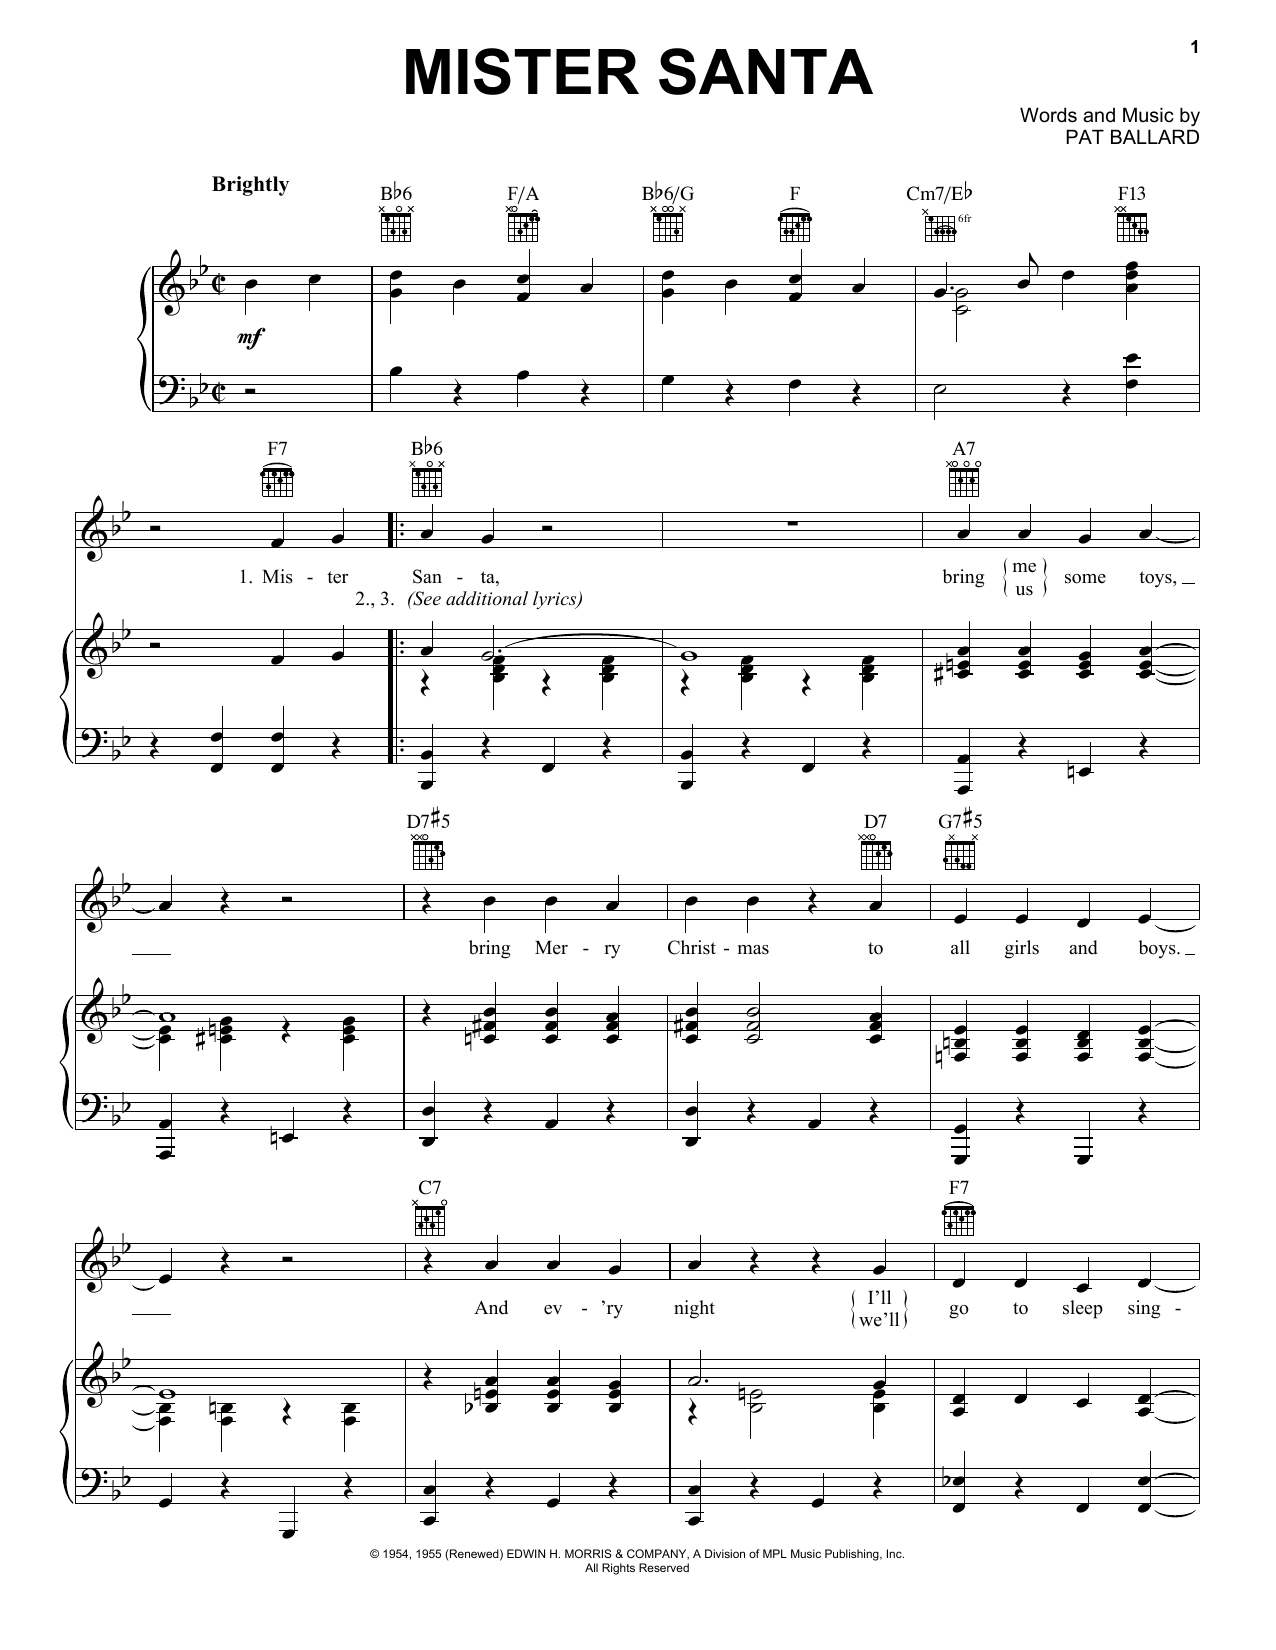 Pat Ballard Mister Santa sheet music notes and chords arranged for 5-Finger Piano